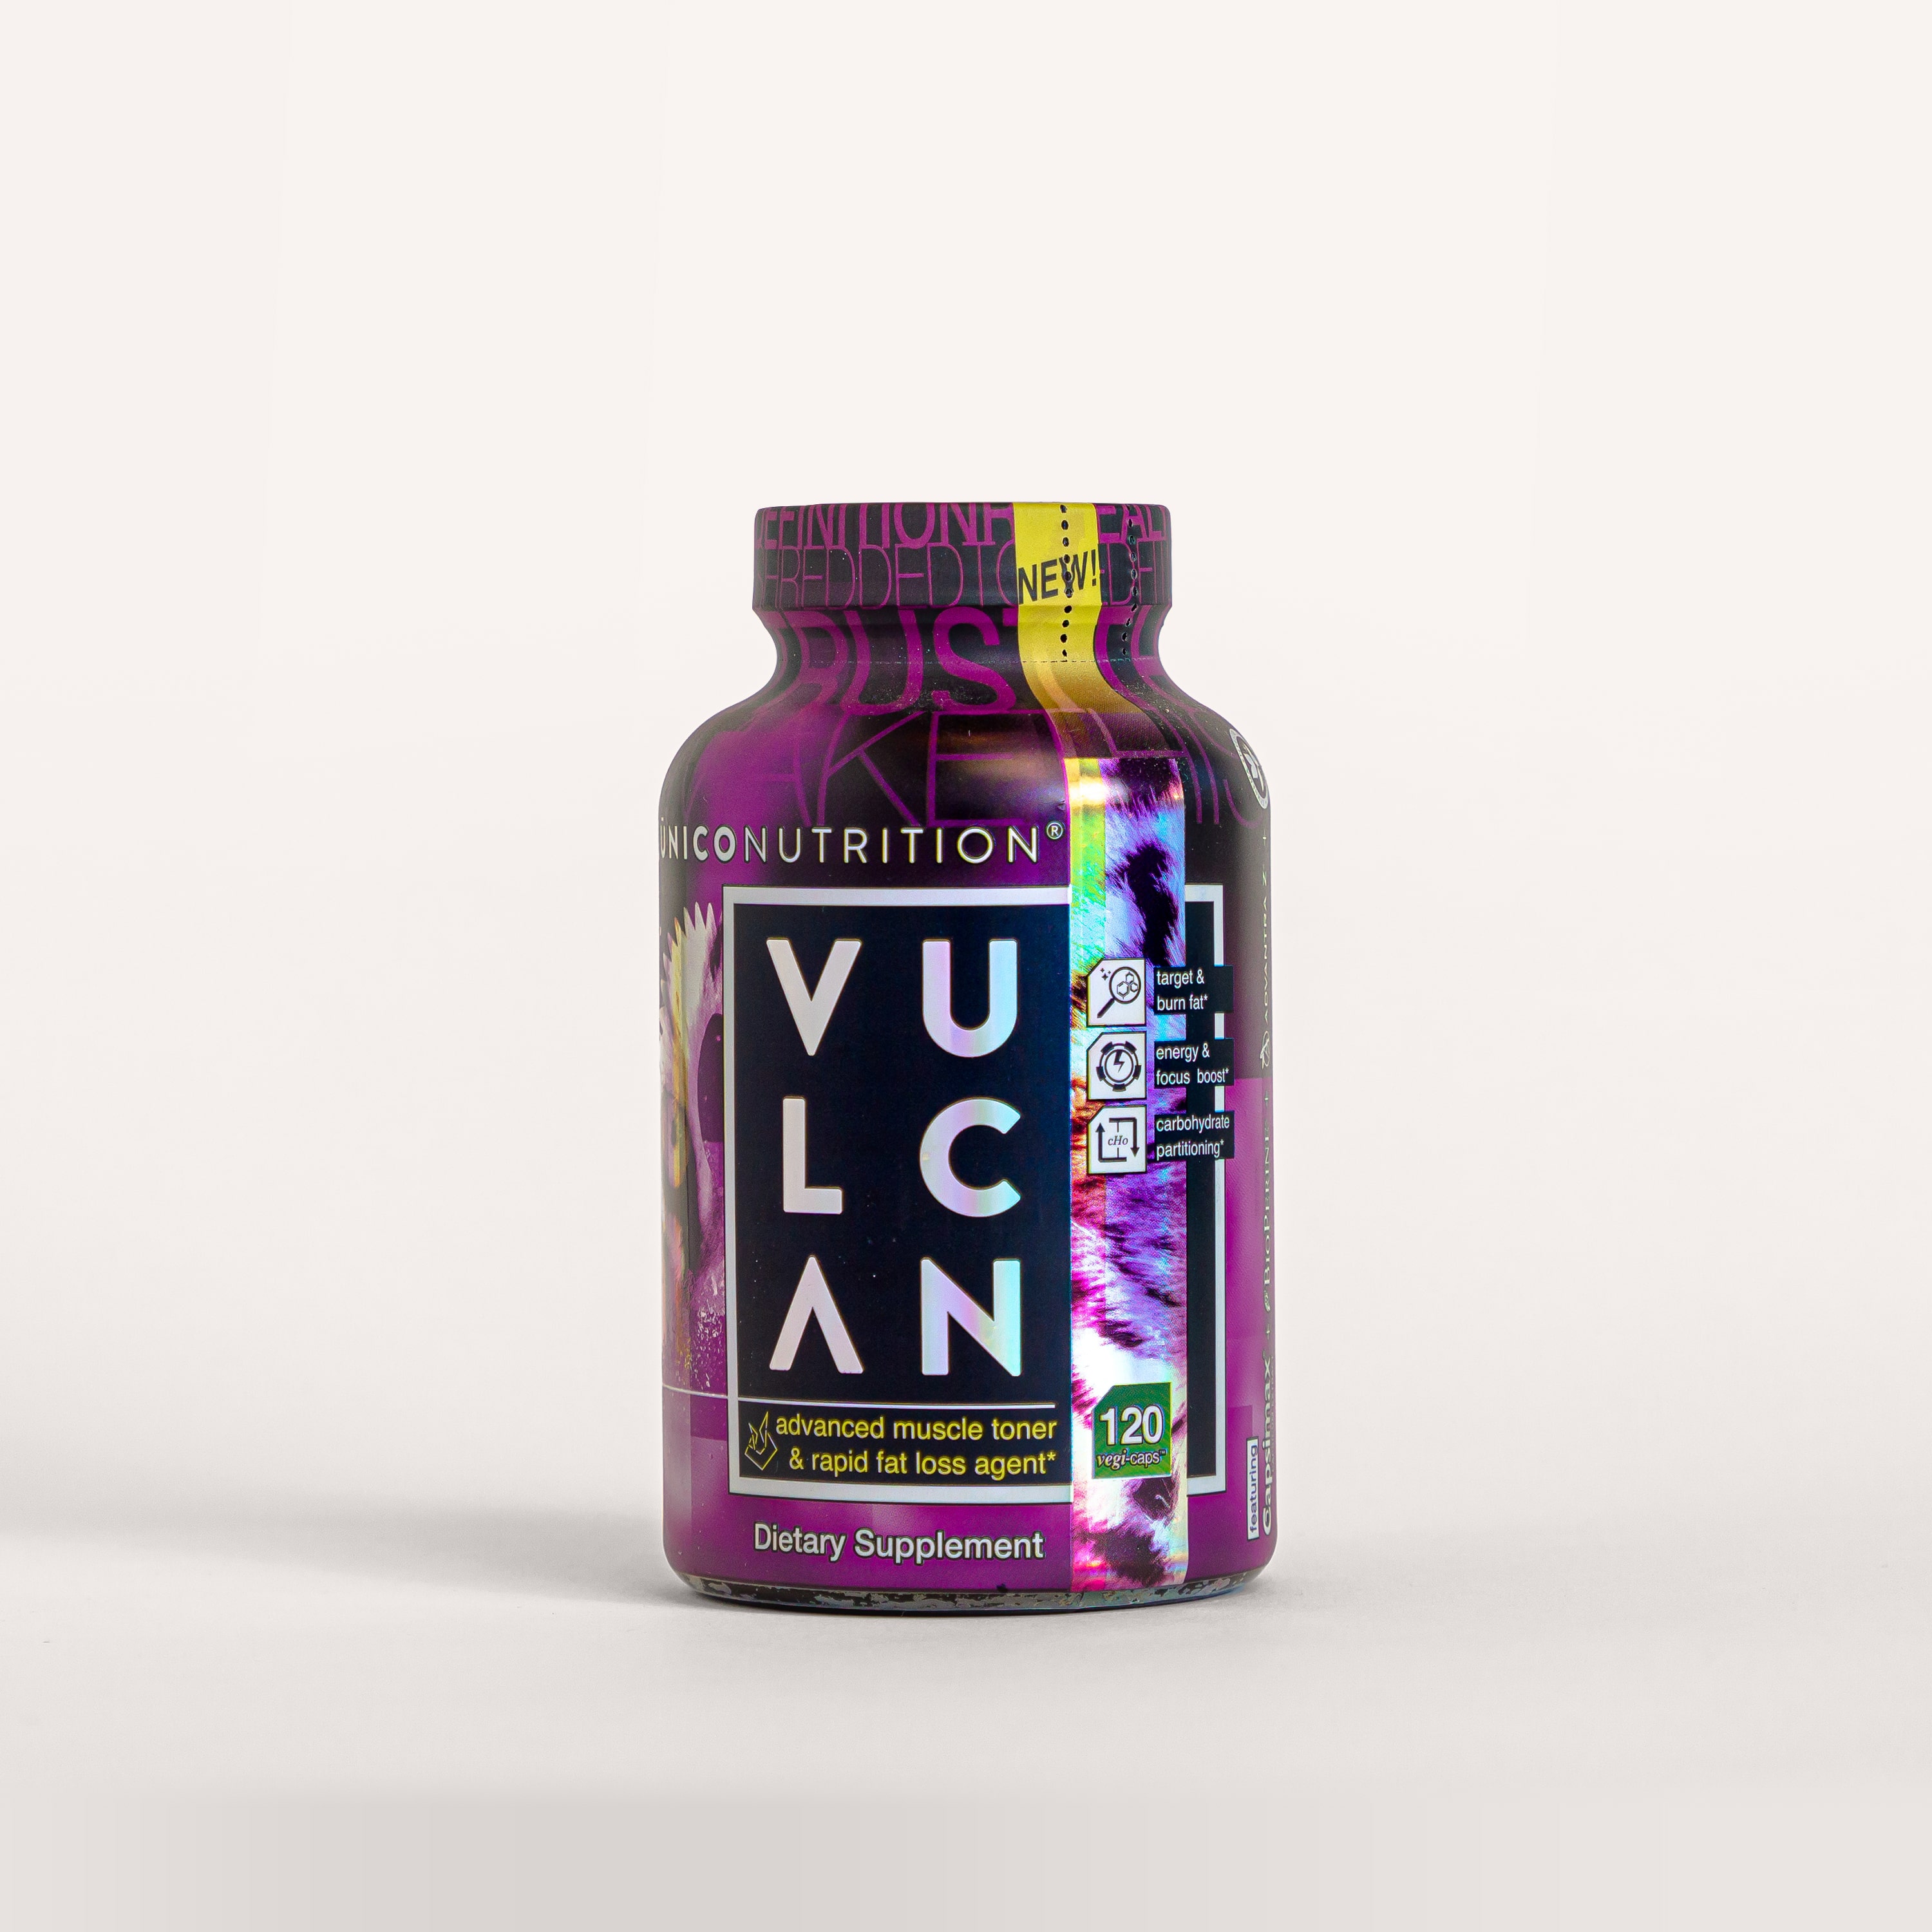 unico vulcan fat burner jar on light-colored product studio background